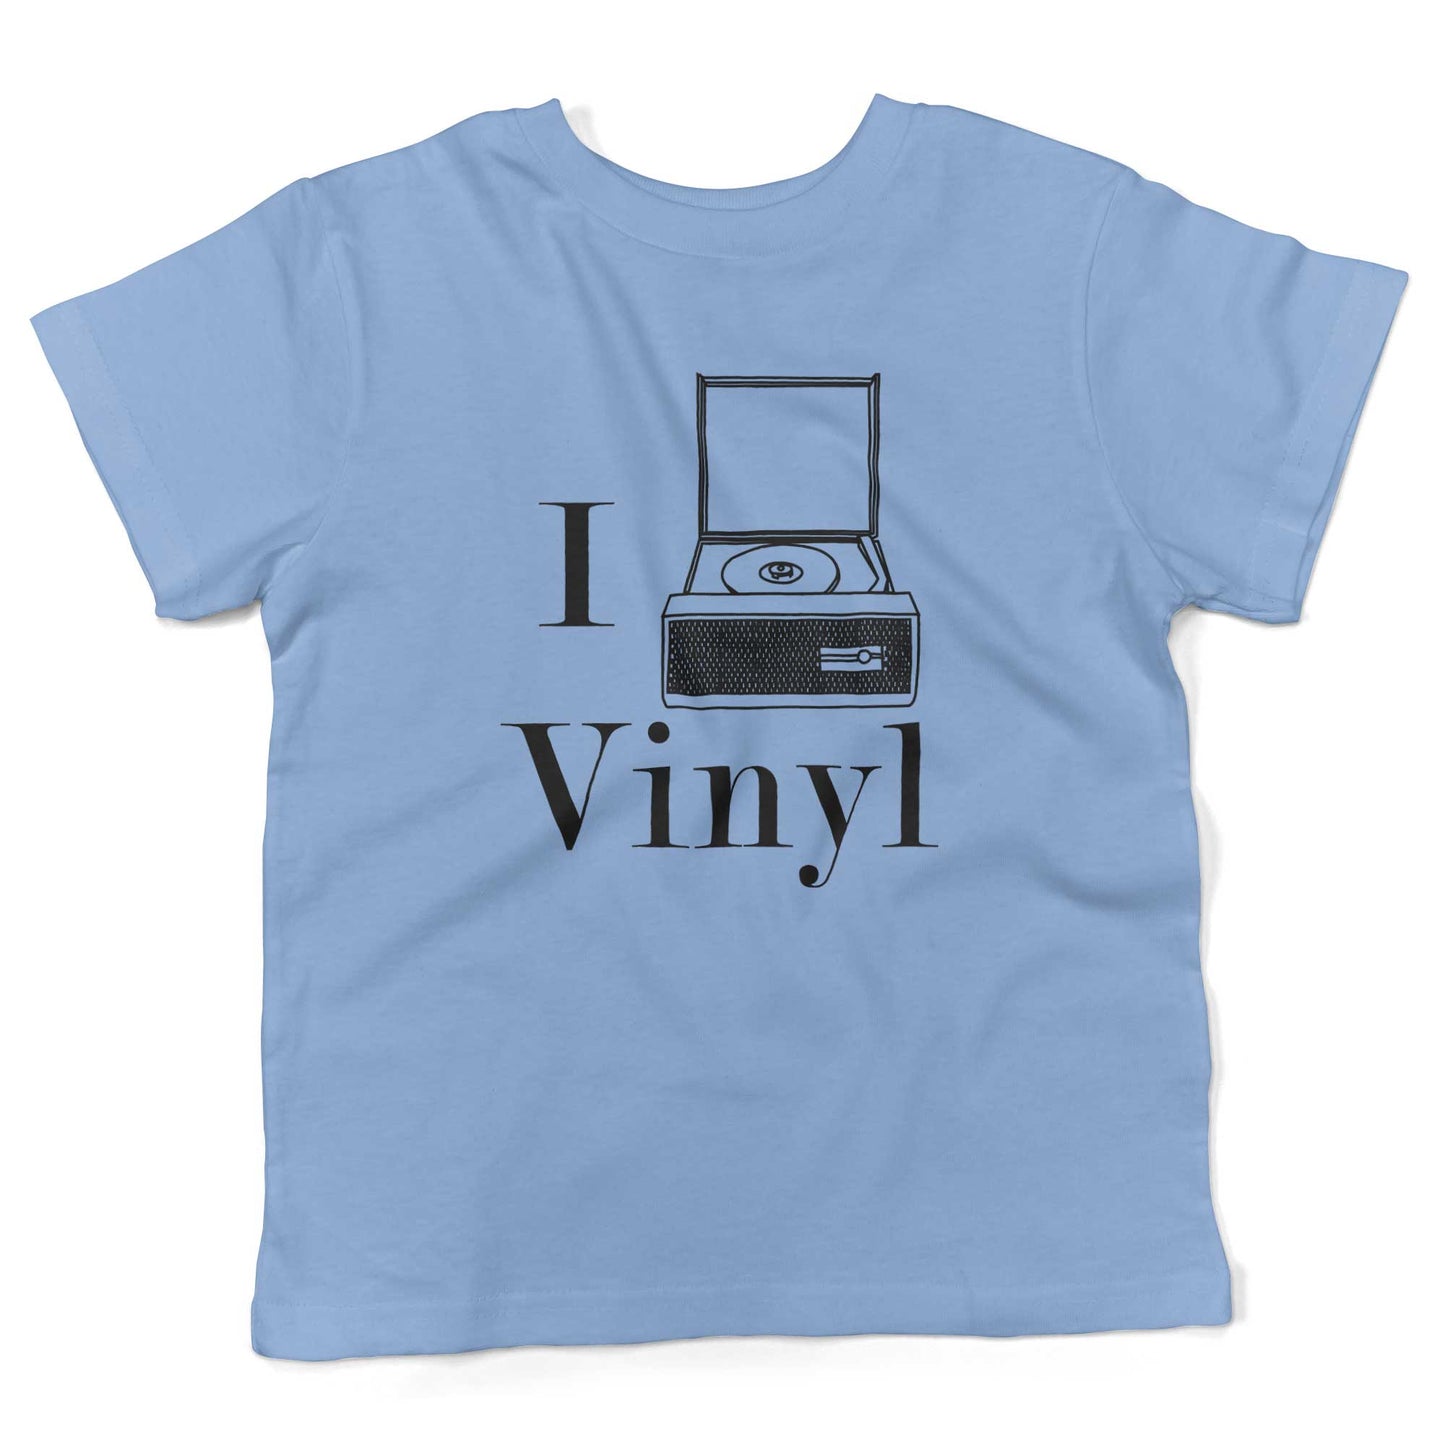 I Play Vinyl Toddler Shirt-Organic Baby Blue-2T